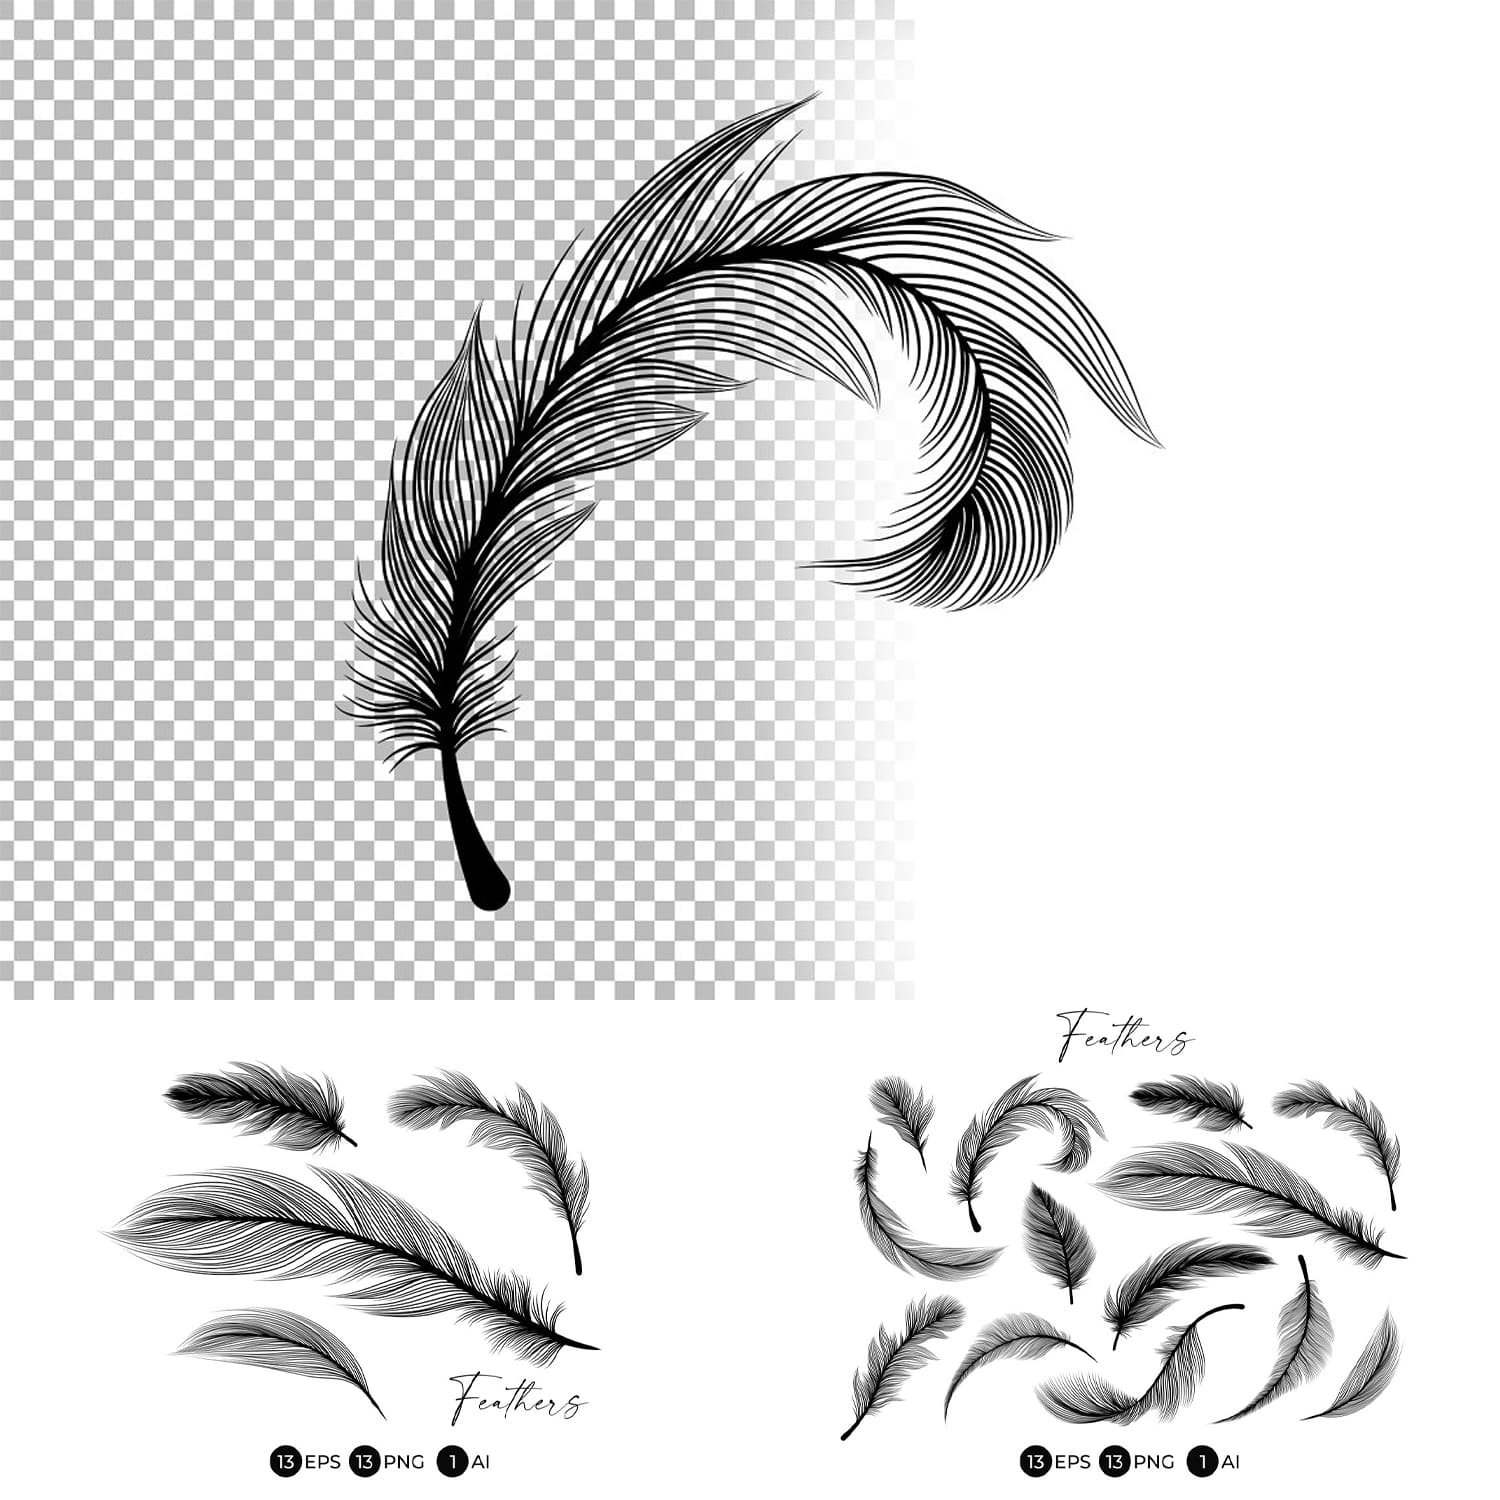 Black feathers stencil boho line art - main image preview.